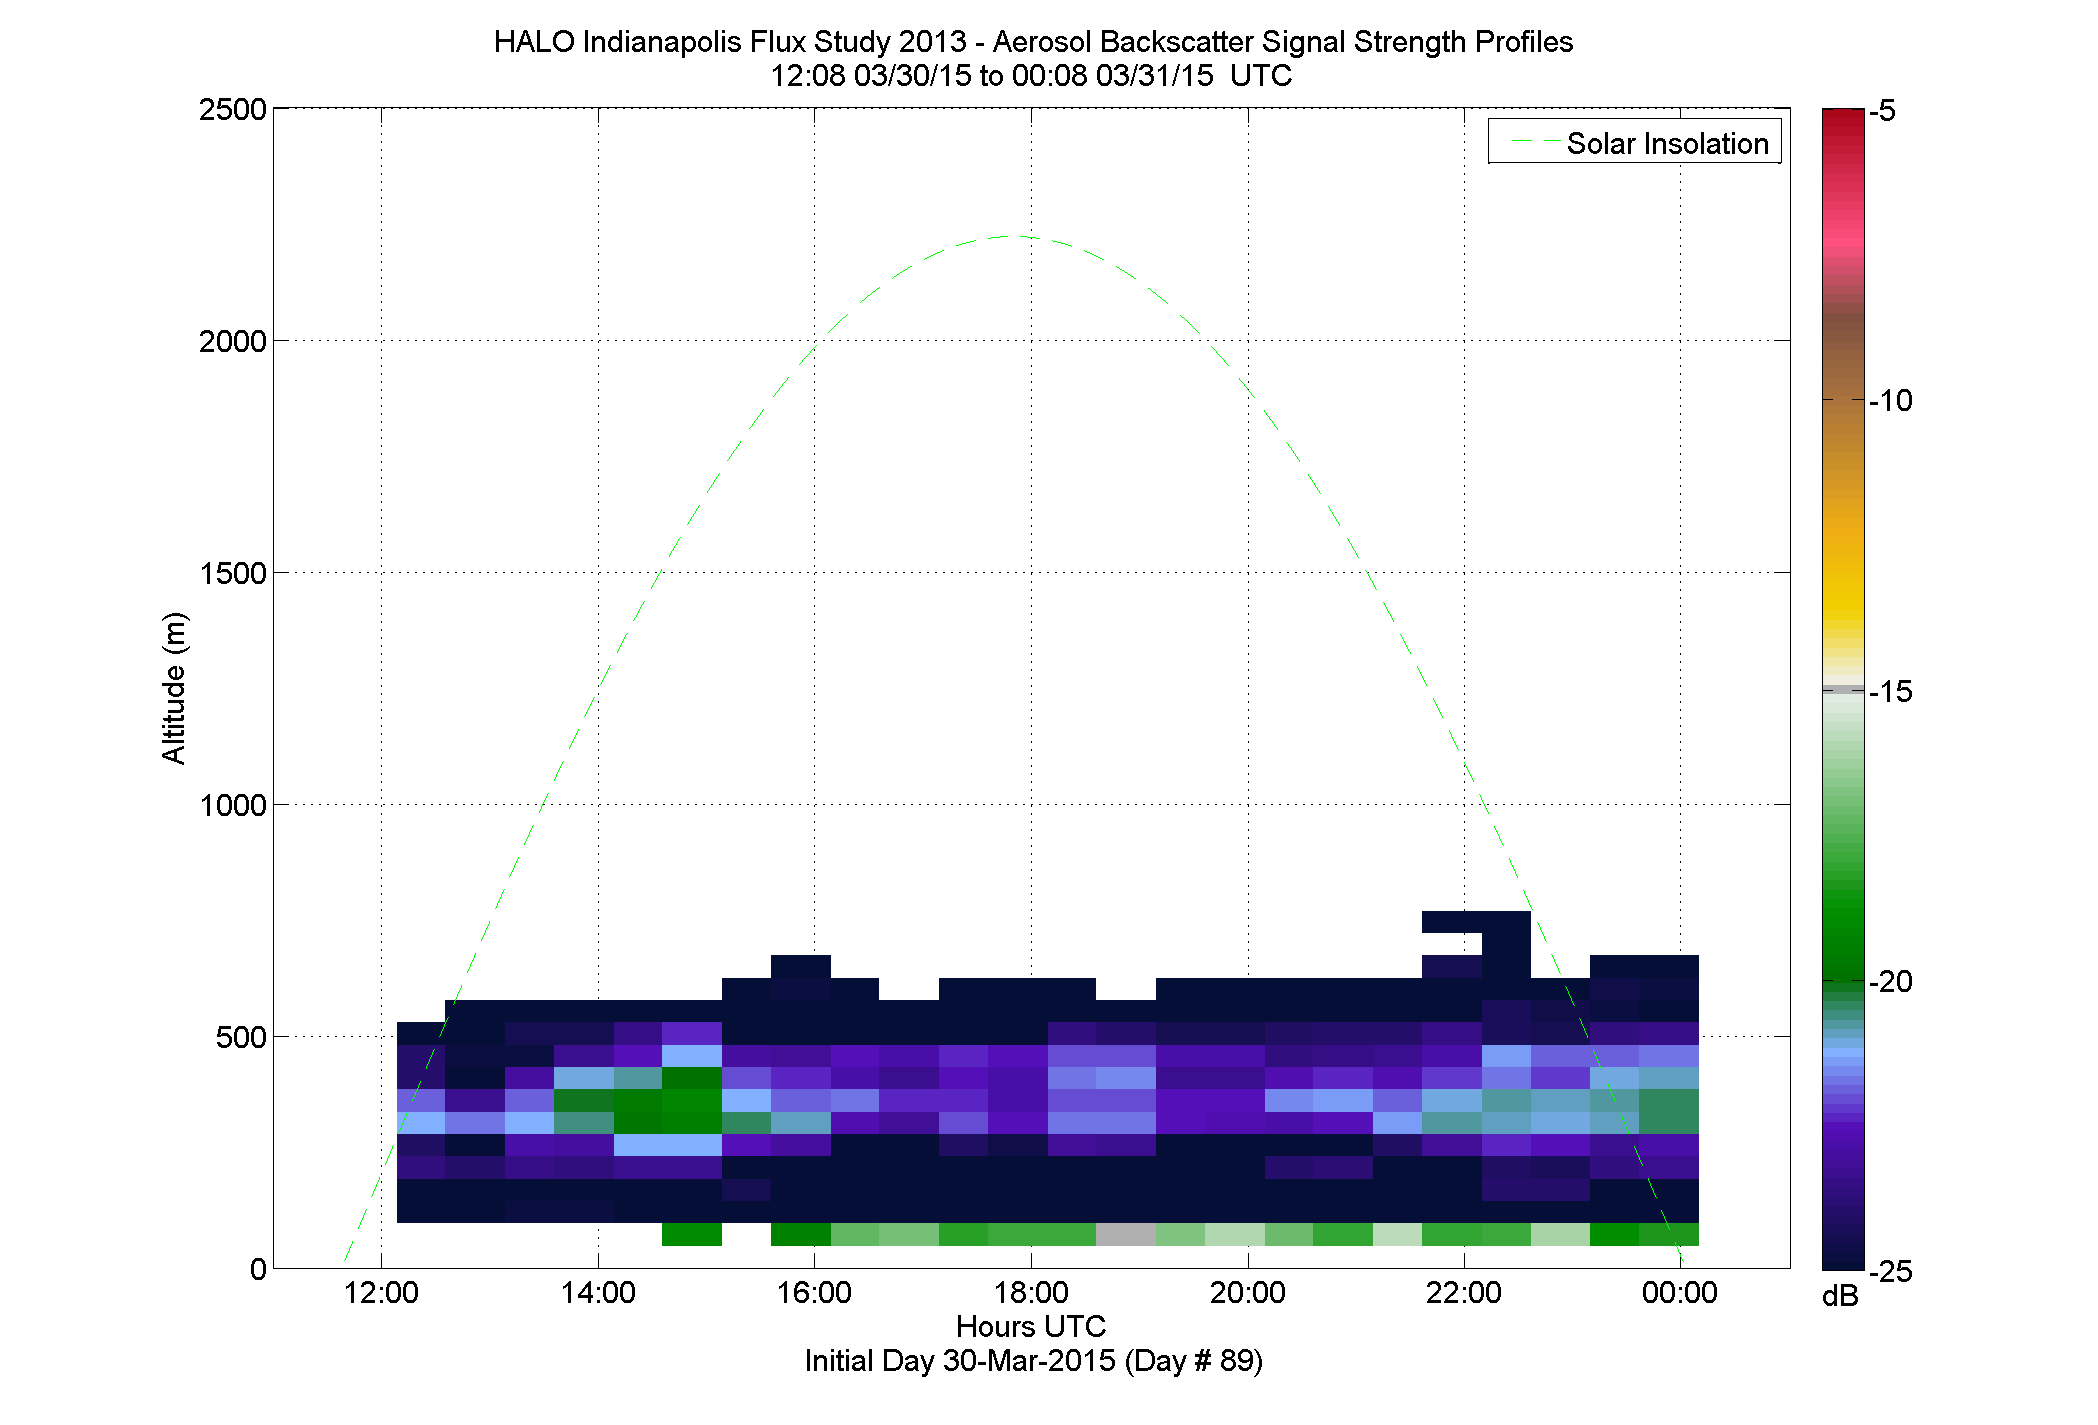 HALO aerosol backscatter signal strength profile - March 30 pm